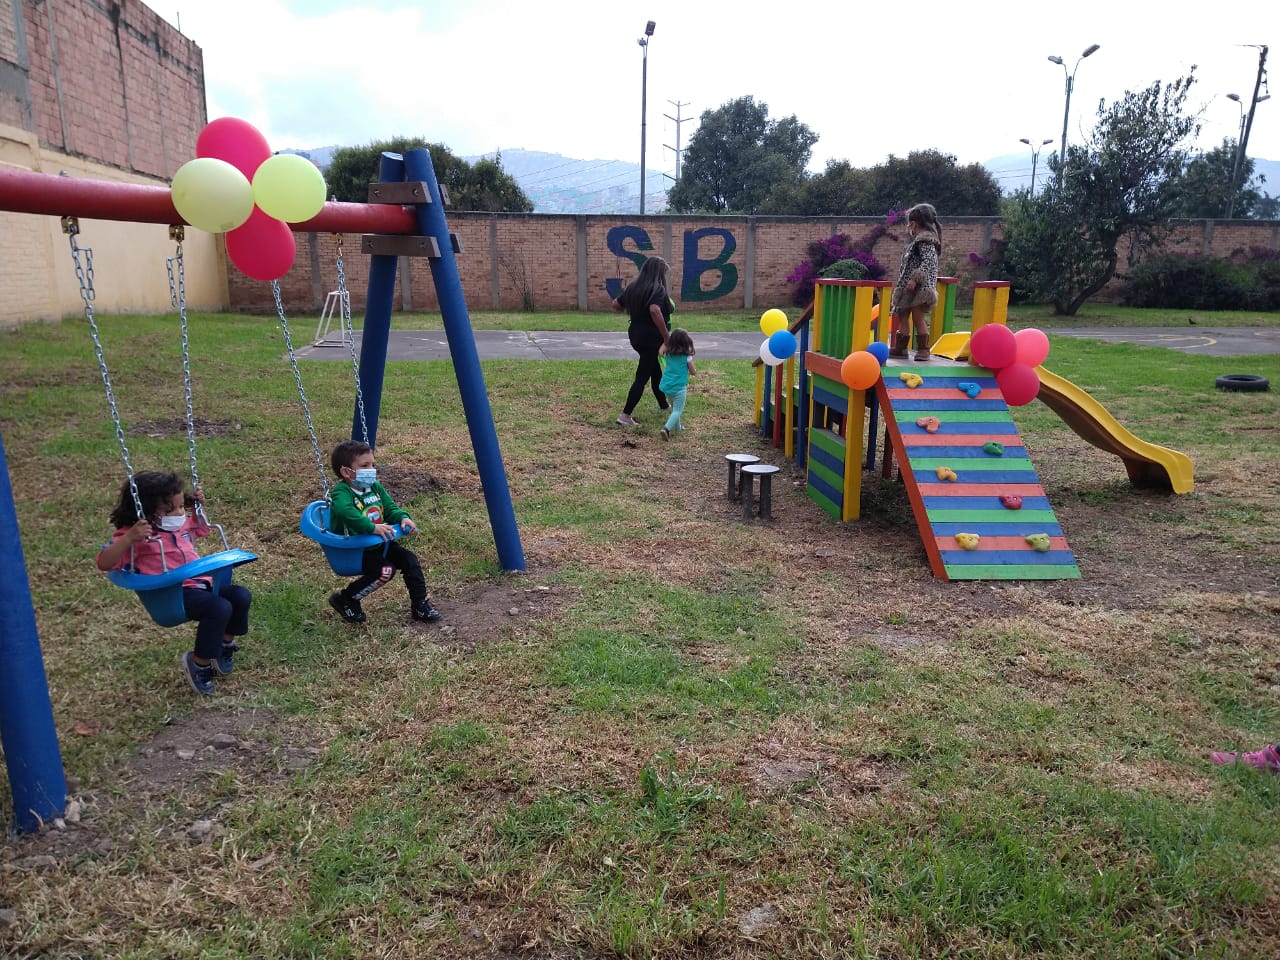 Último proyecto en Santander: un parque infantil de exterior. - Parques  infantiles I Oziona